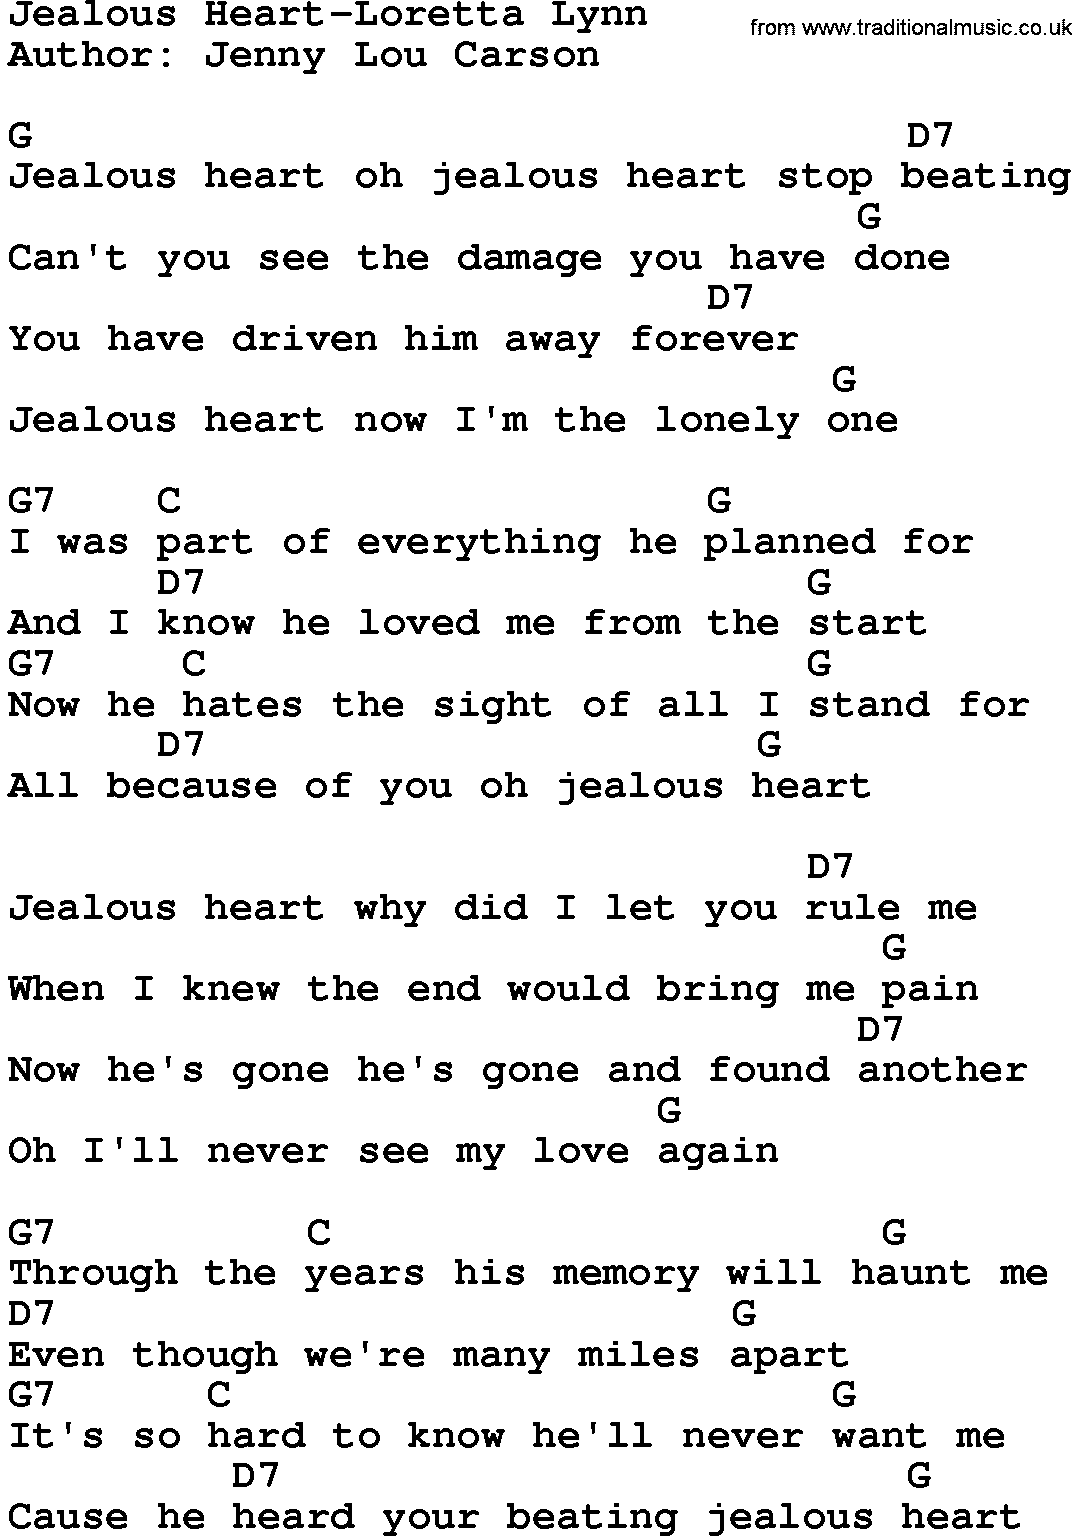 Country music song: Jealous Heart-Loretta Lynn lyrics and chords